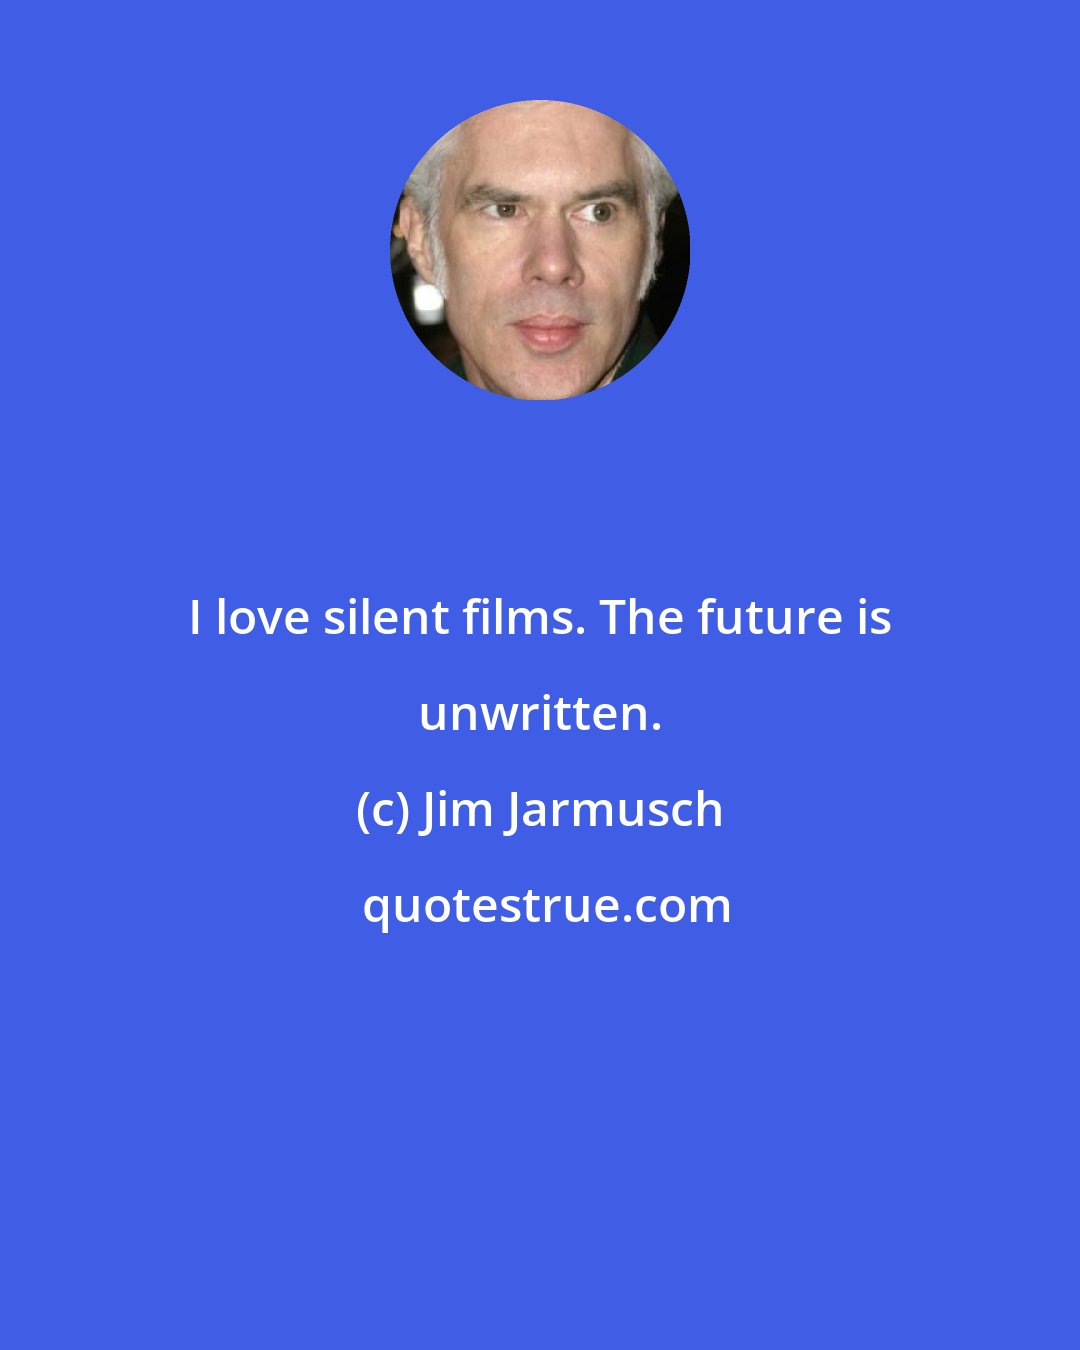 Jim Jarmusch: I love silent films. The future is unwritten.